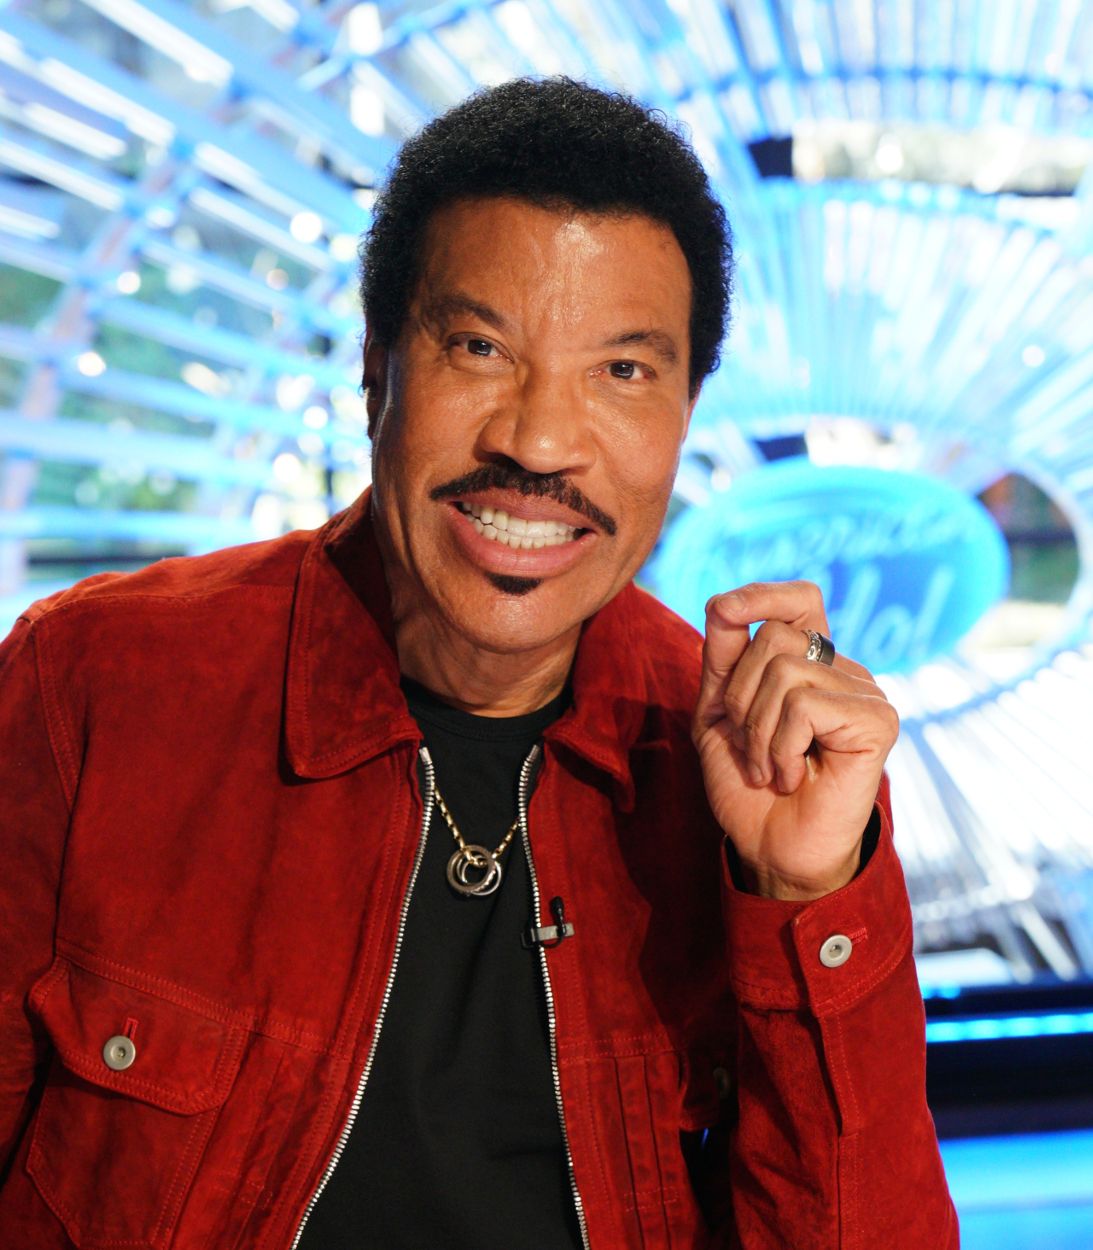 Lionel Richie on American Idol red jacket vertical